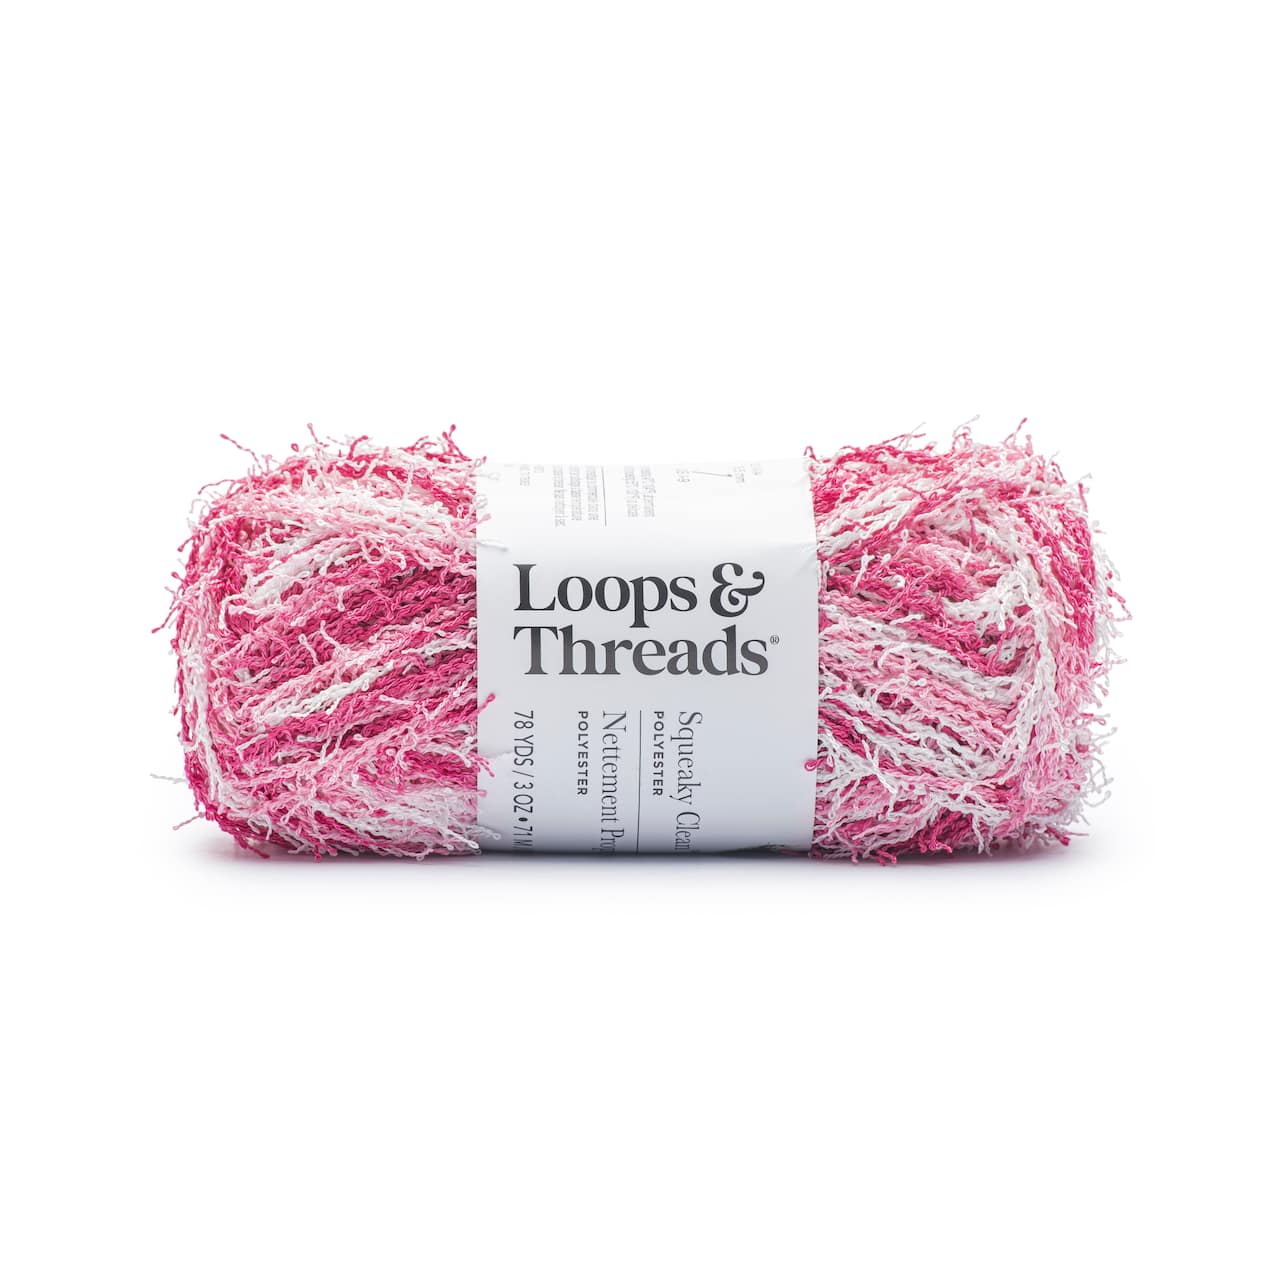 I Love This Cotton Print Yarn in Pink/teal/orange 